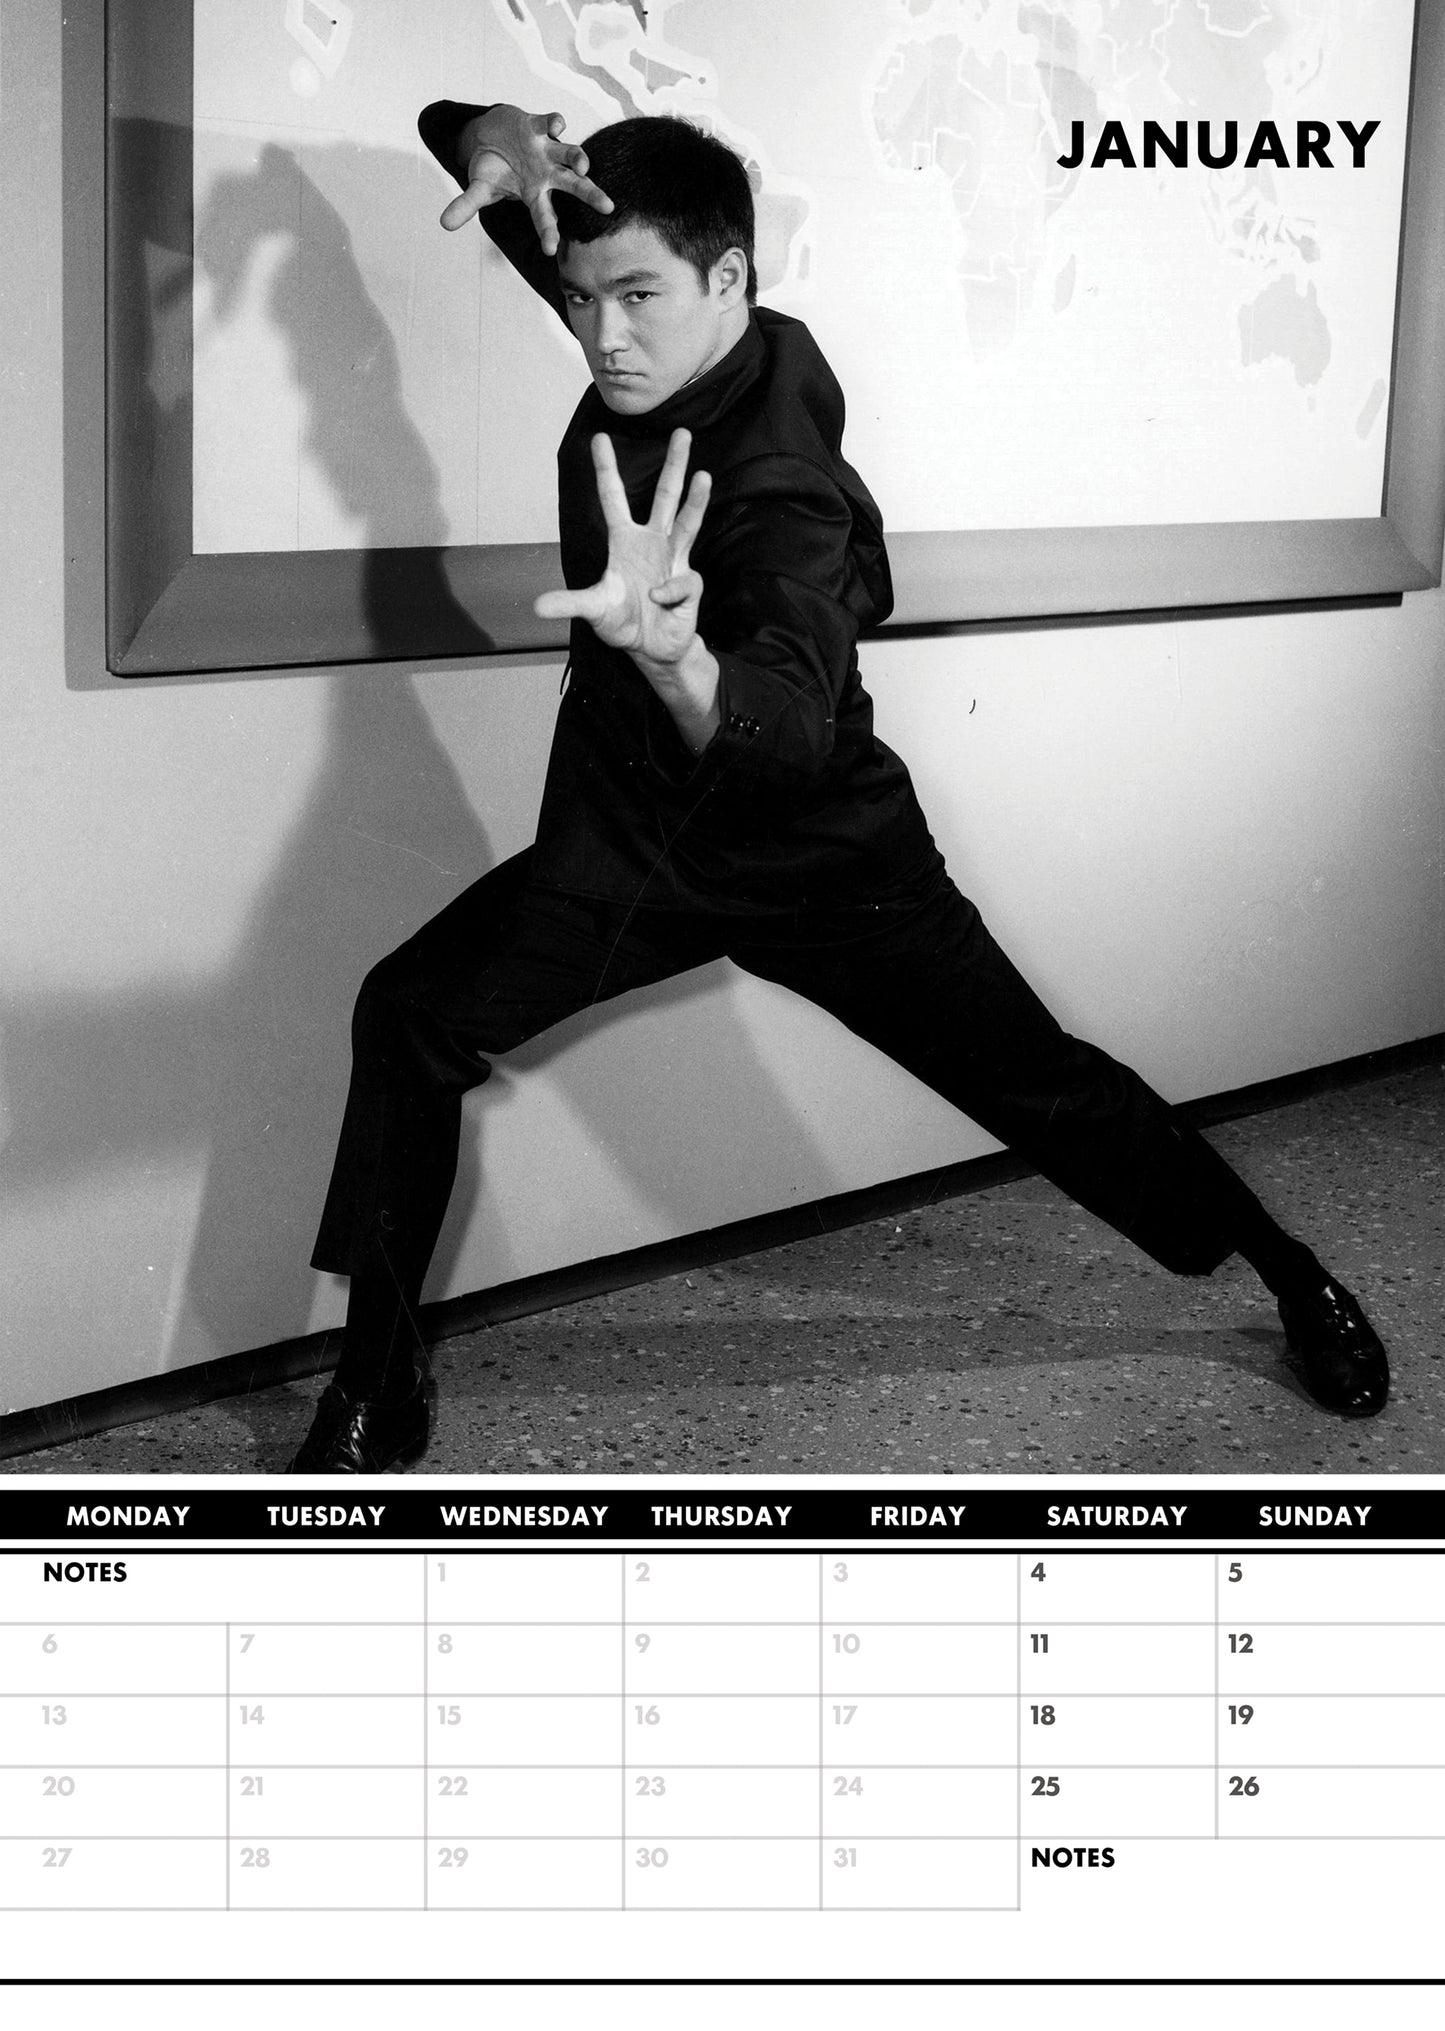 Bruce Lee Calendar 2025